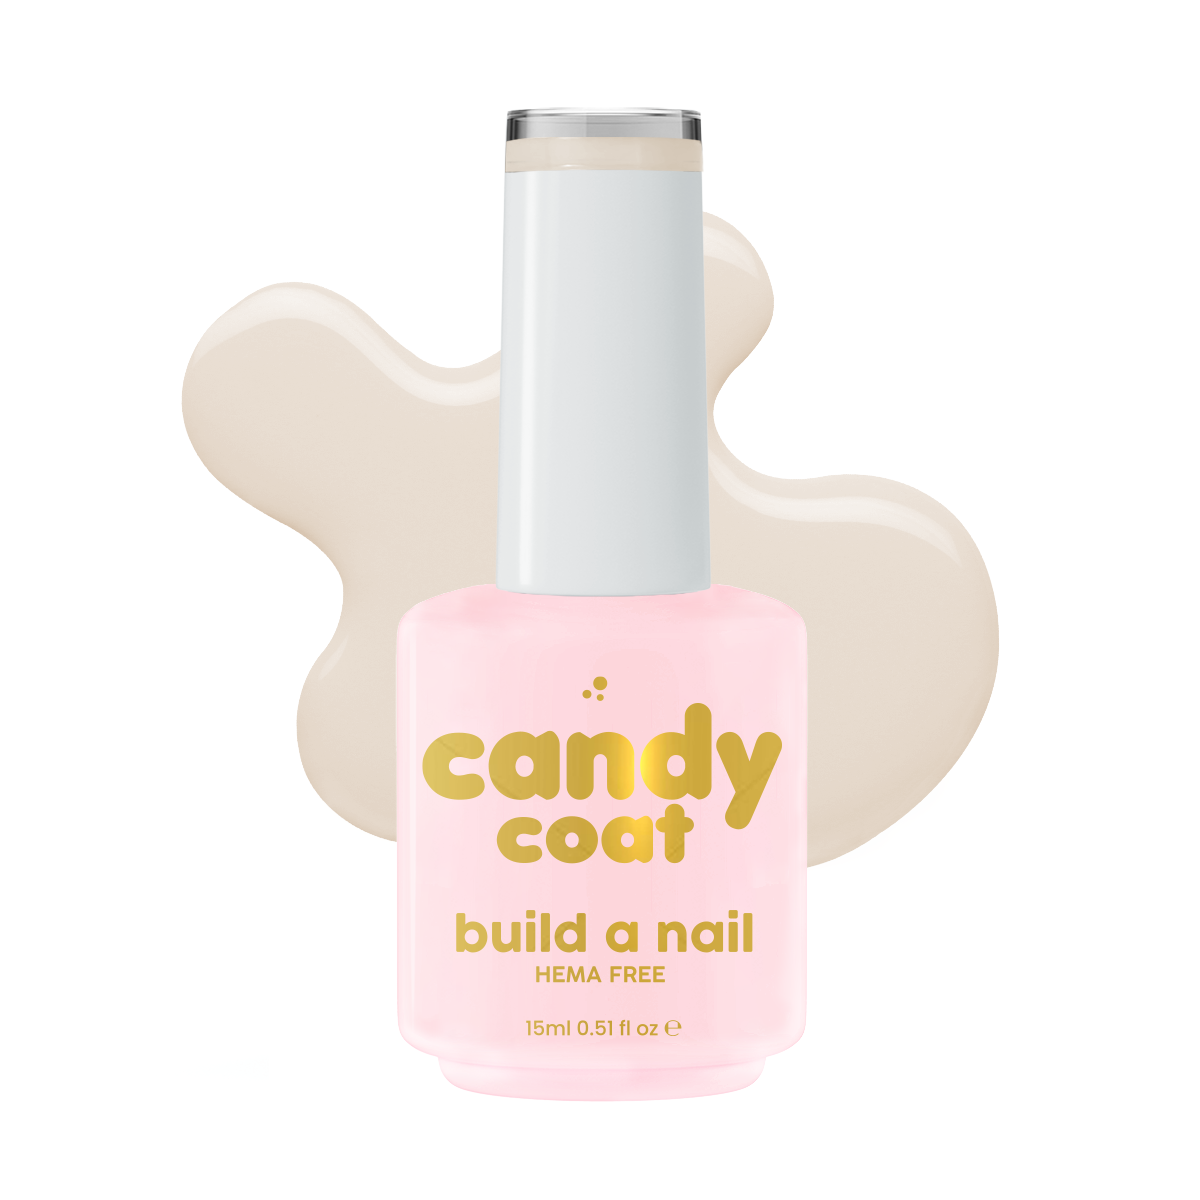 Candy Coat - HEMA Free Build-a-Nail® - BH005 15ml - Candy Coat